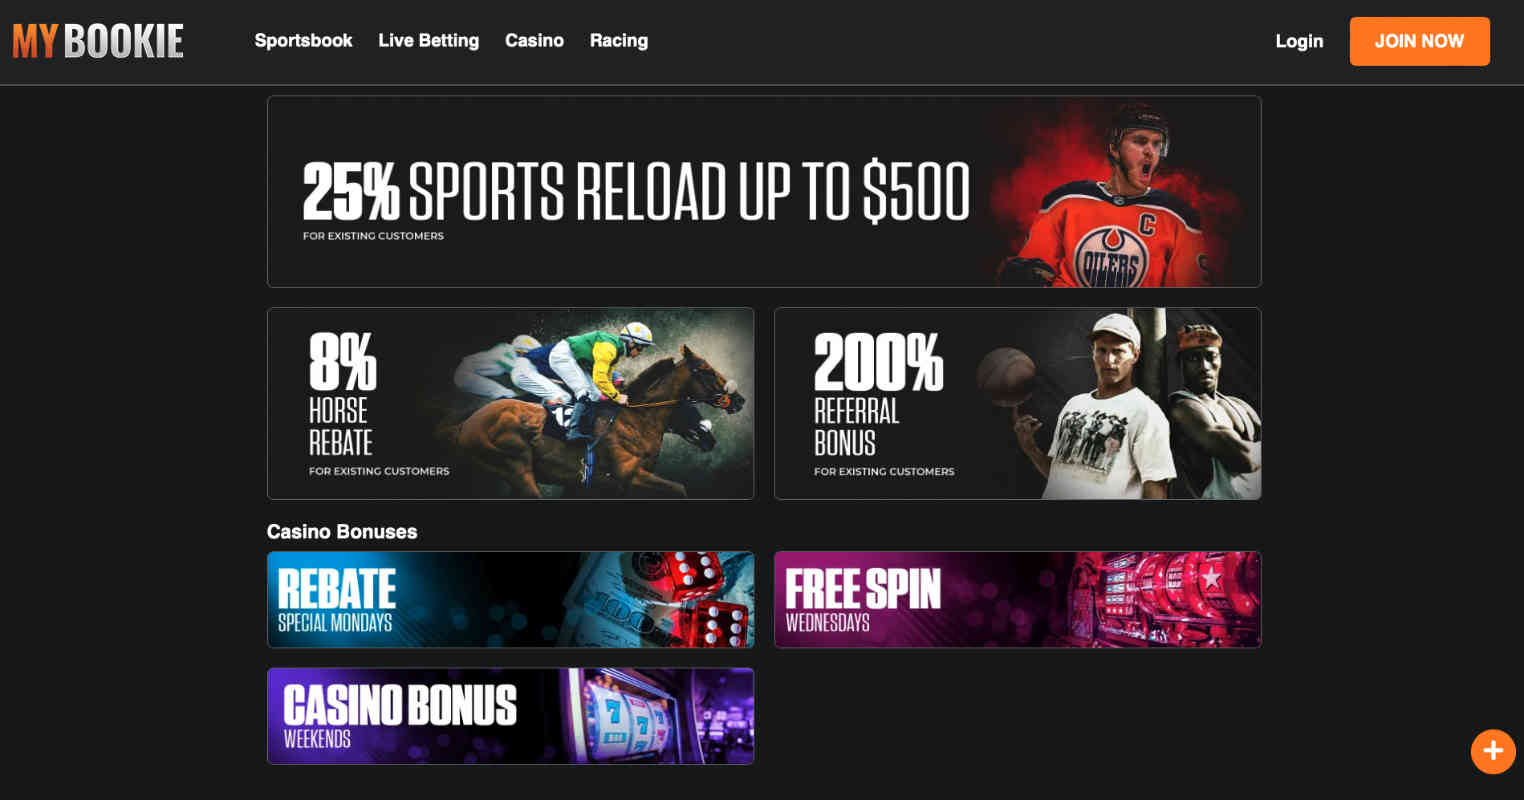 Best Free Spins Offers at Online Casinos 2022 - Get 100 Free Spins